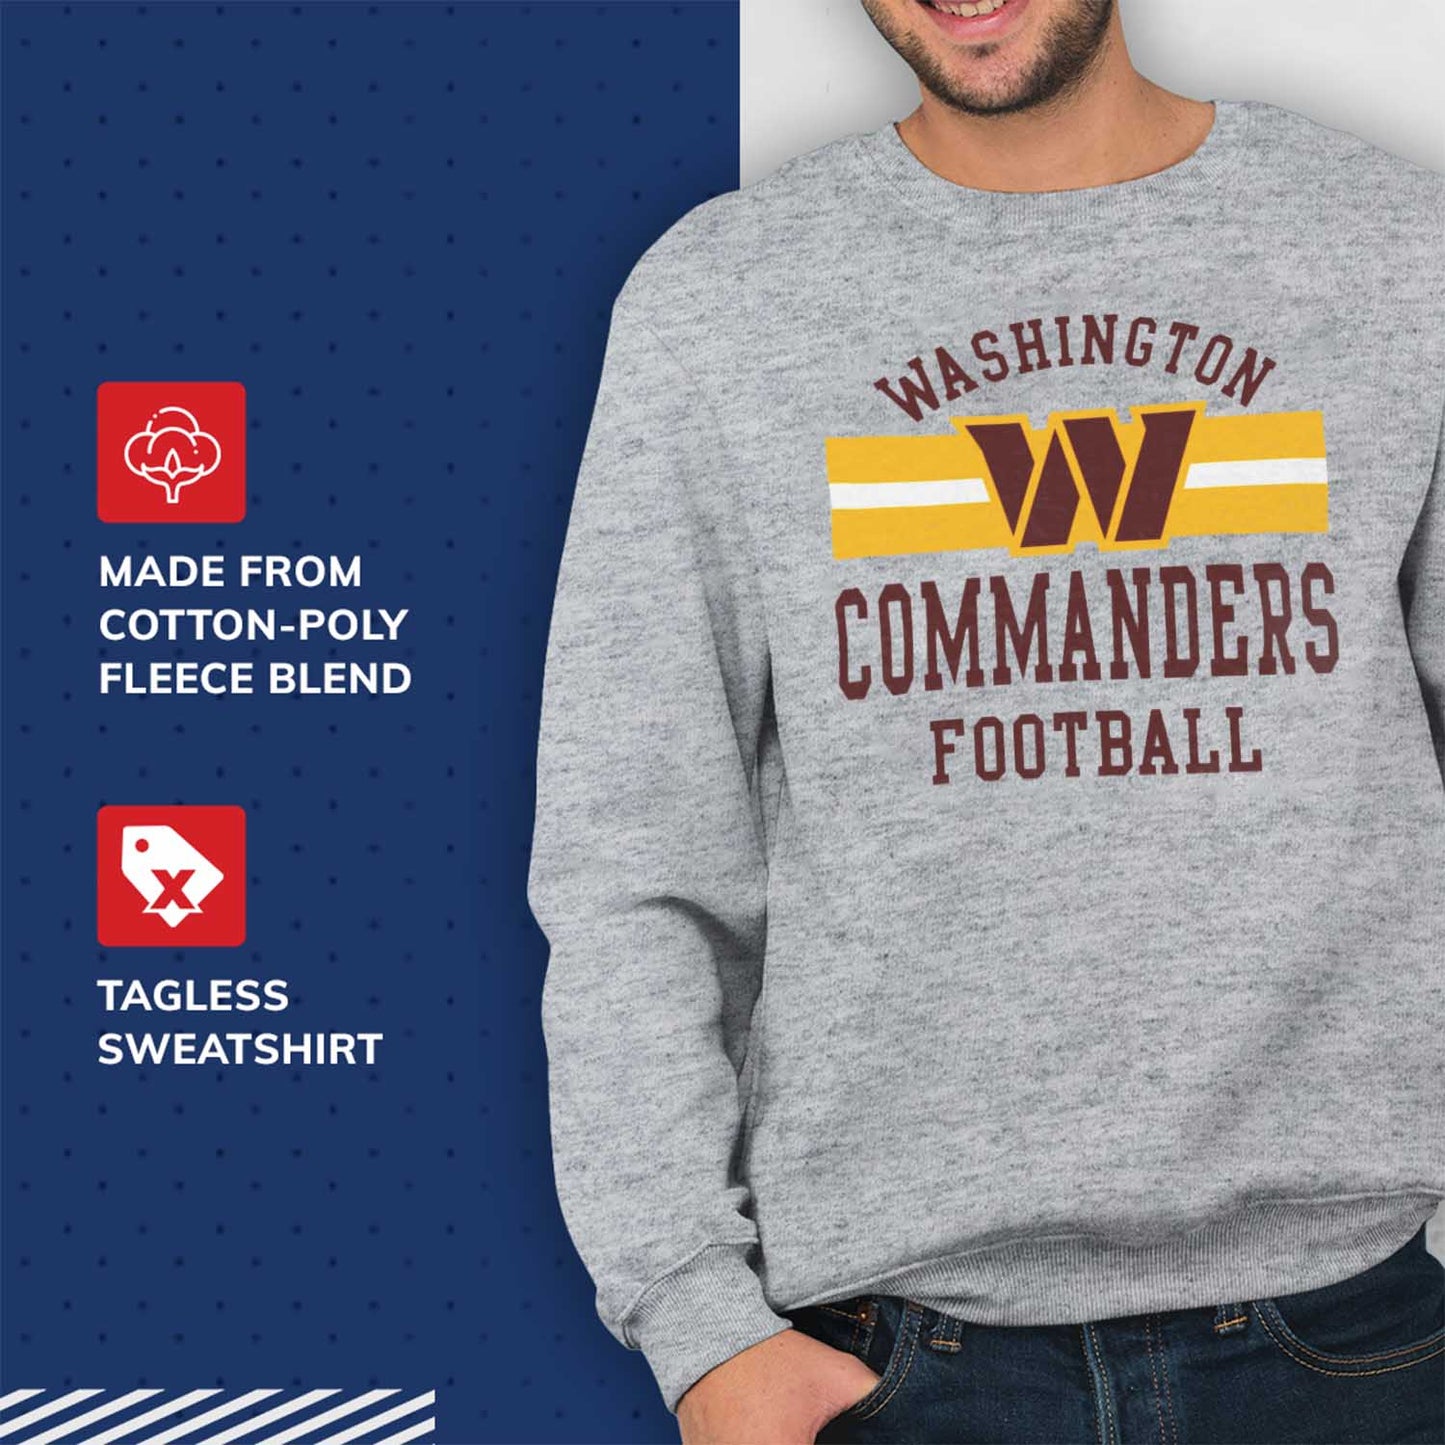 Washington Commanders NFL Team Stripe Crew Sweatshirt - Sport Gray